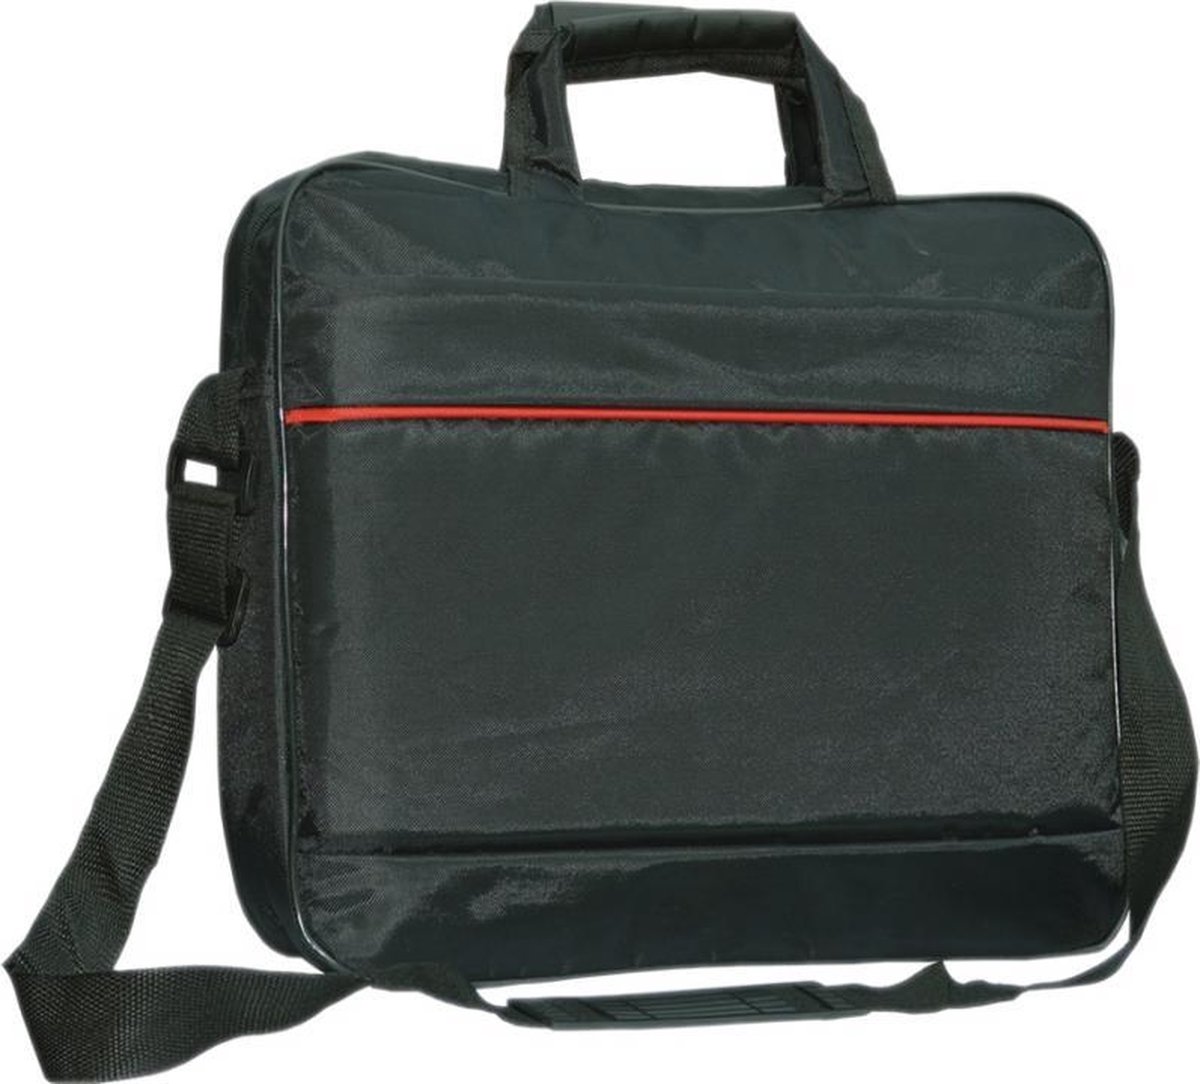 Asus Vivobook X200ca laptoptas messenger bag / schoudertas / tas , zwart , merk i12Cover